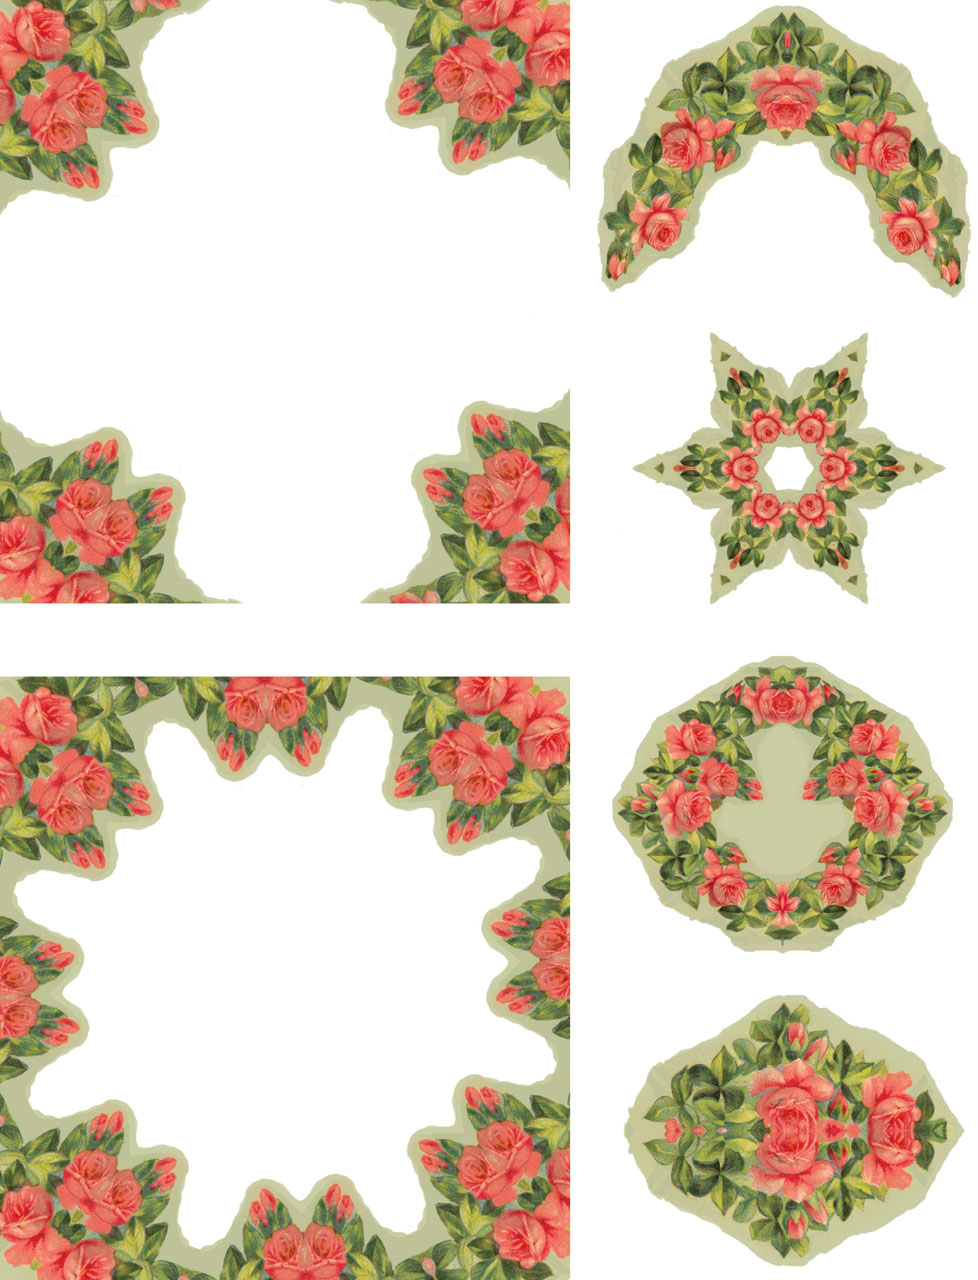 Roses Corail collage fiche